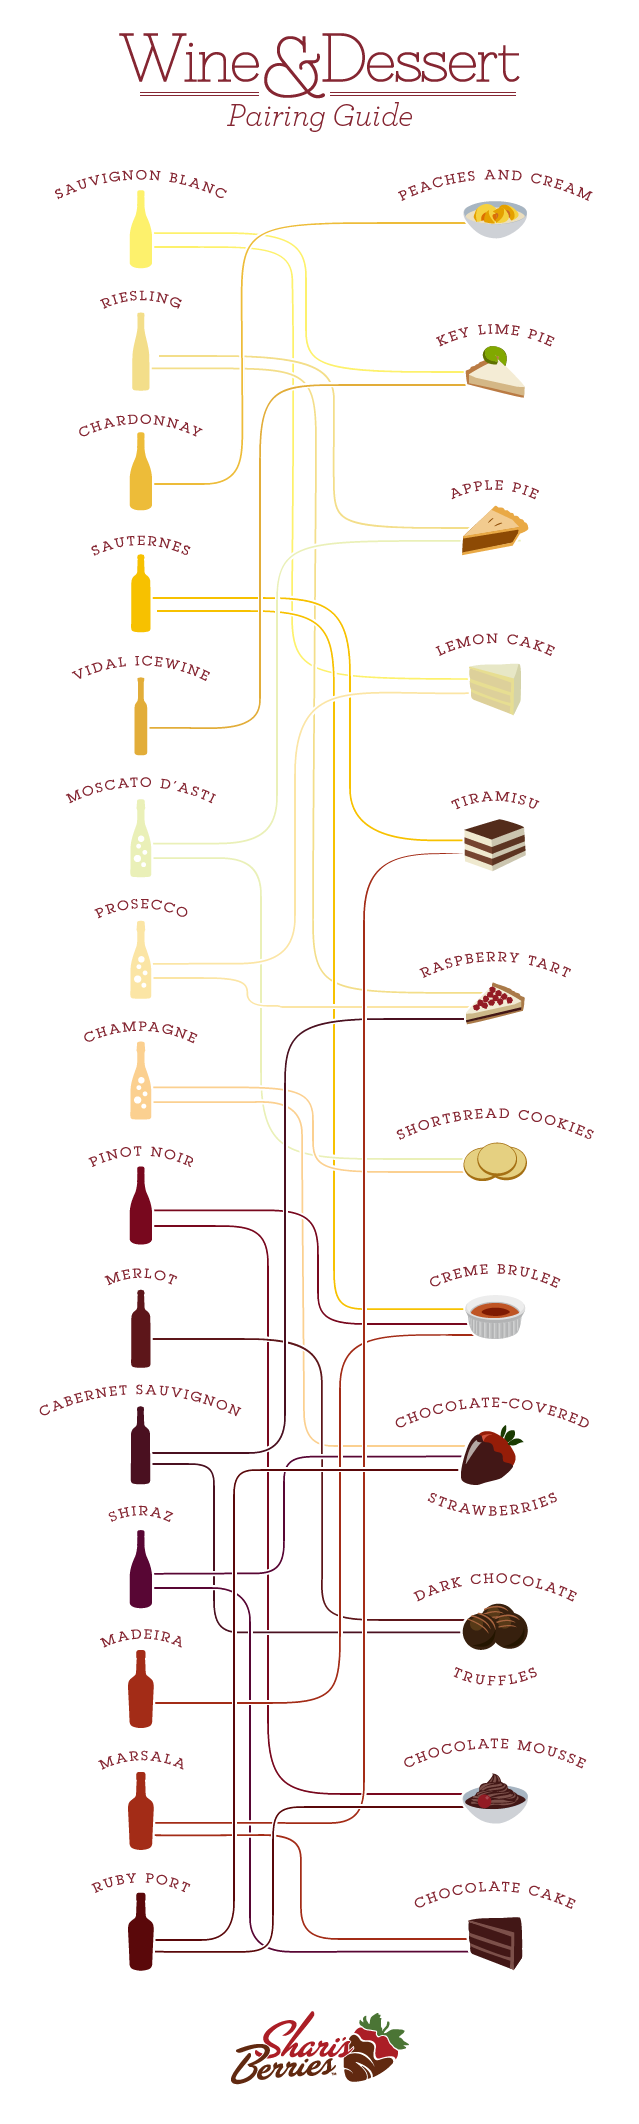 Wine and Dessert Guide